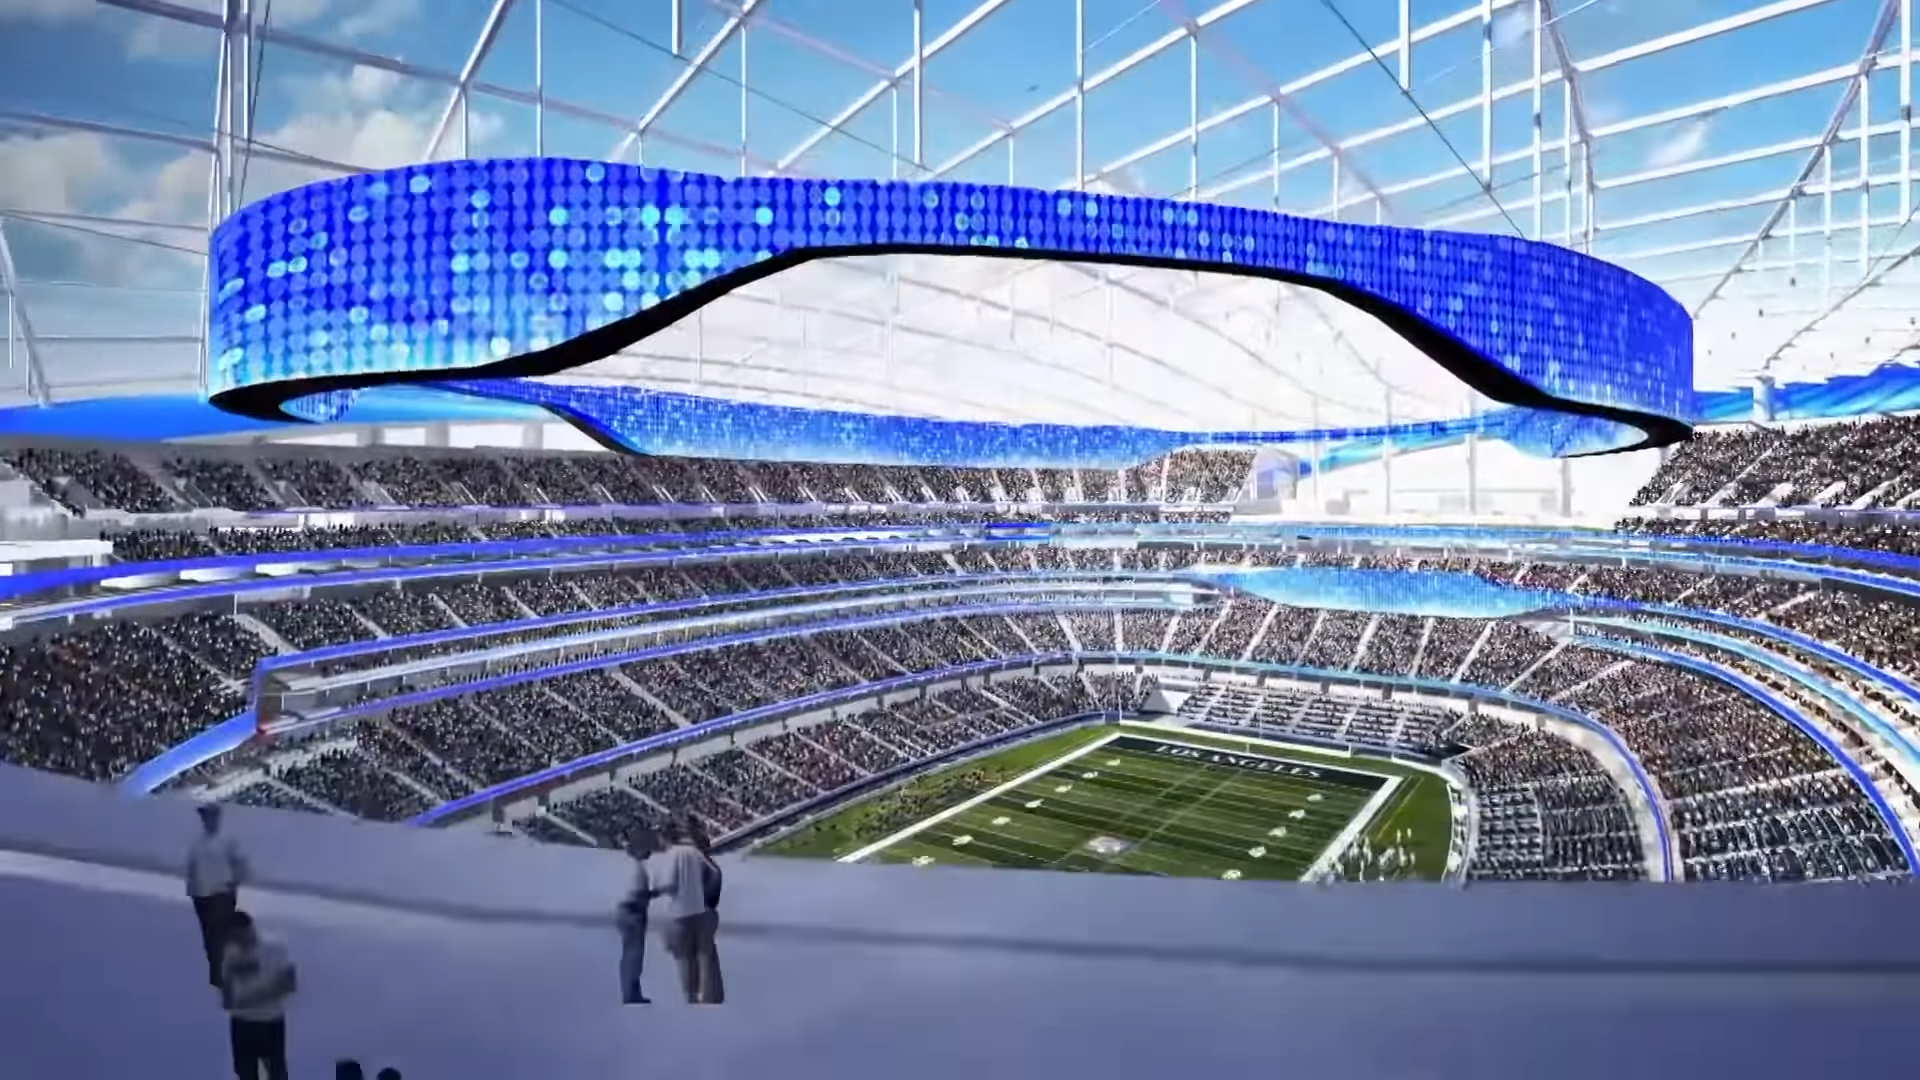 Estádio futurista metaverso interior arena esportiva de alta tecnologia